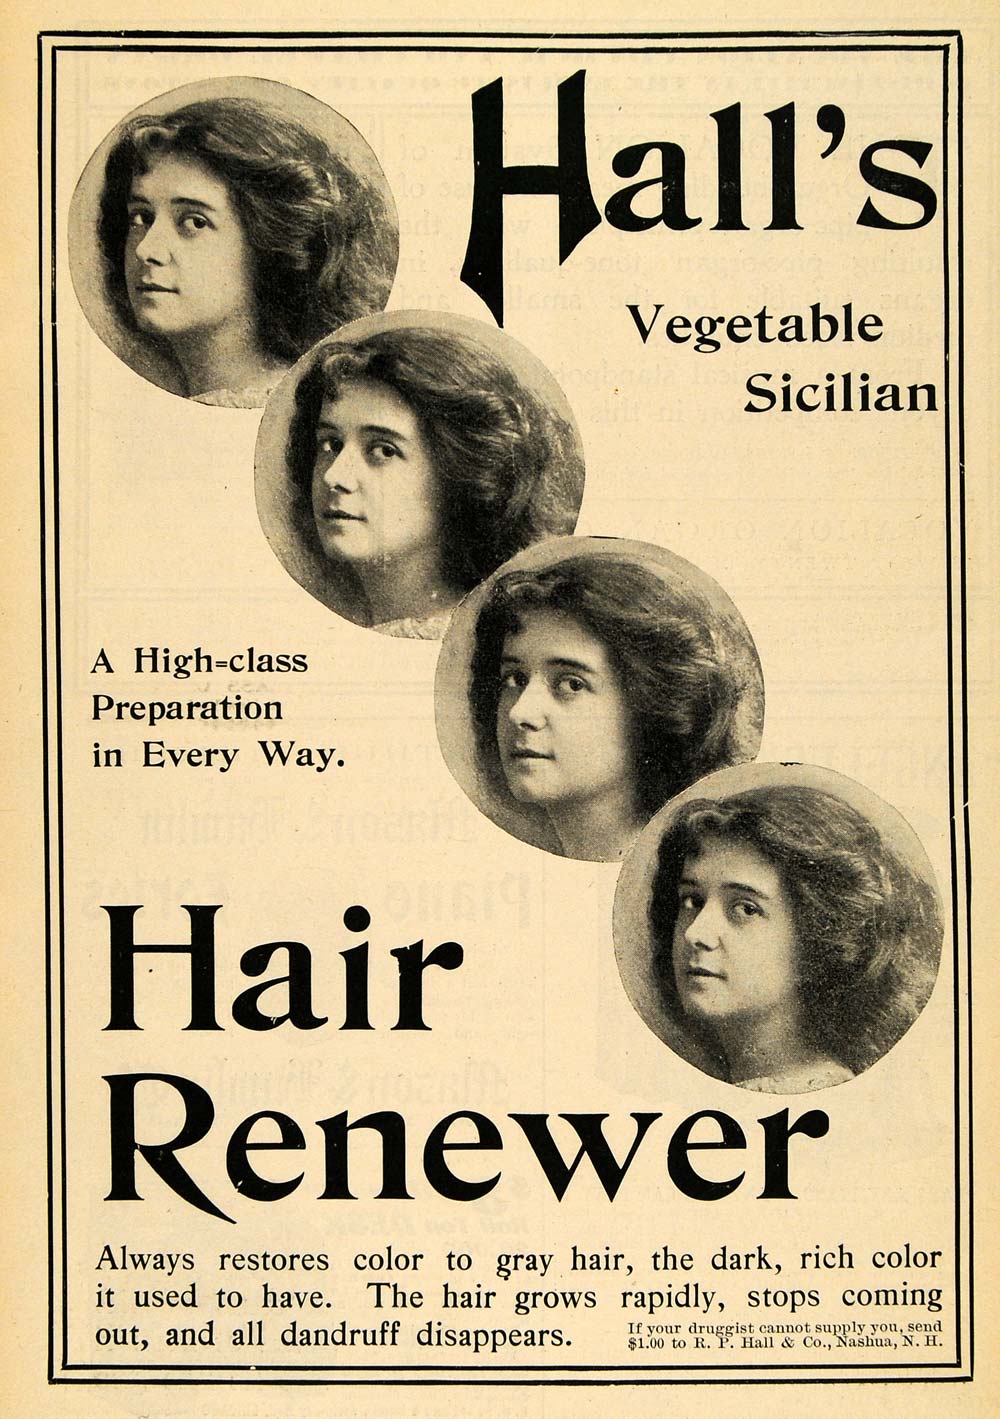 1900 Ad R Hall Vegetable Sicilian Hair Renewer Shampoo - ORIGINAL TOM1